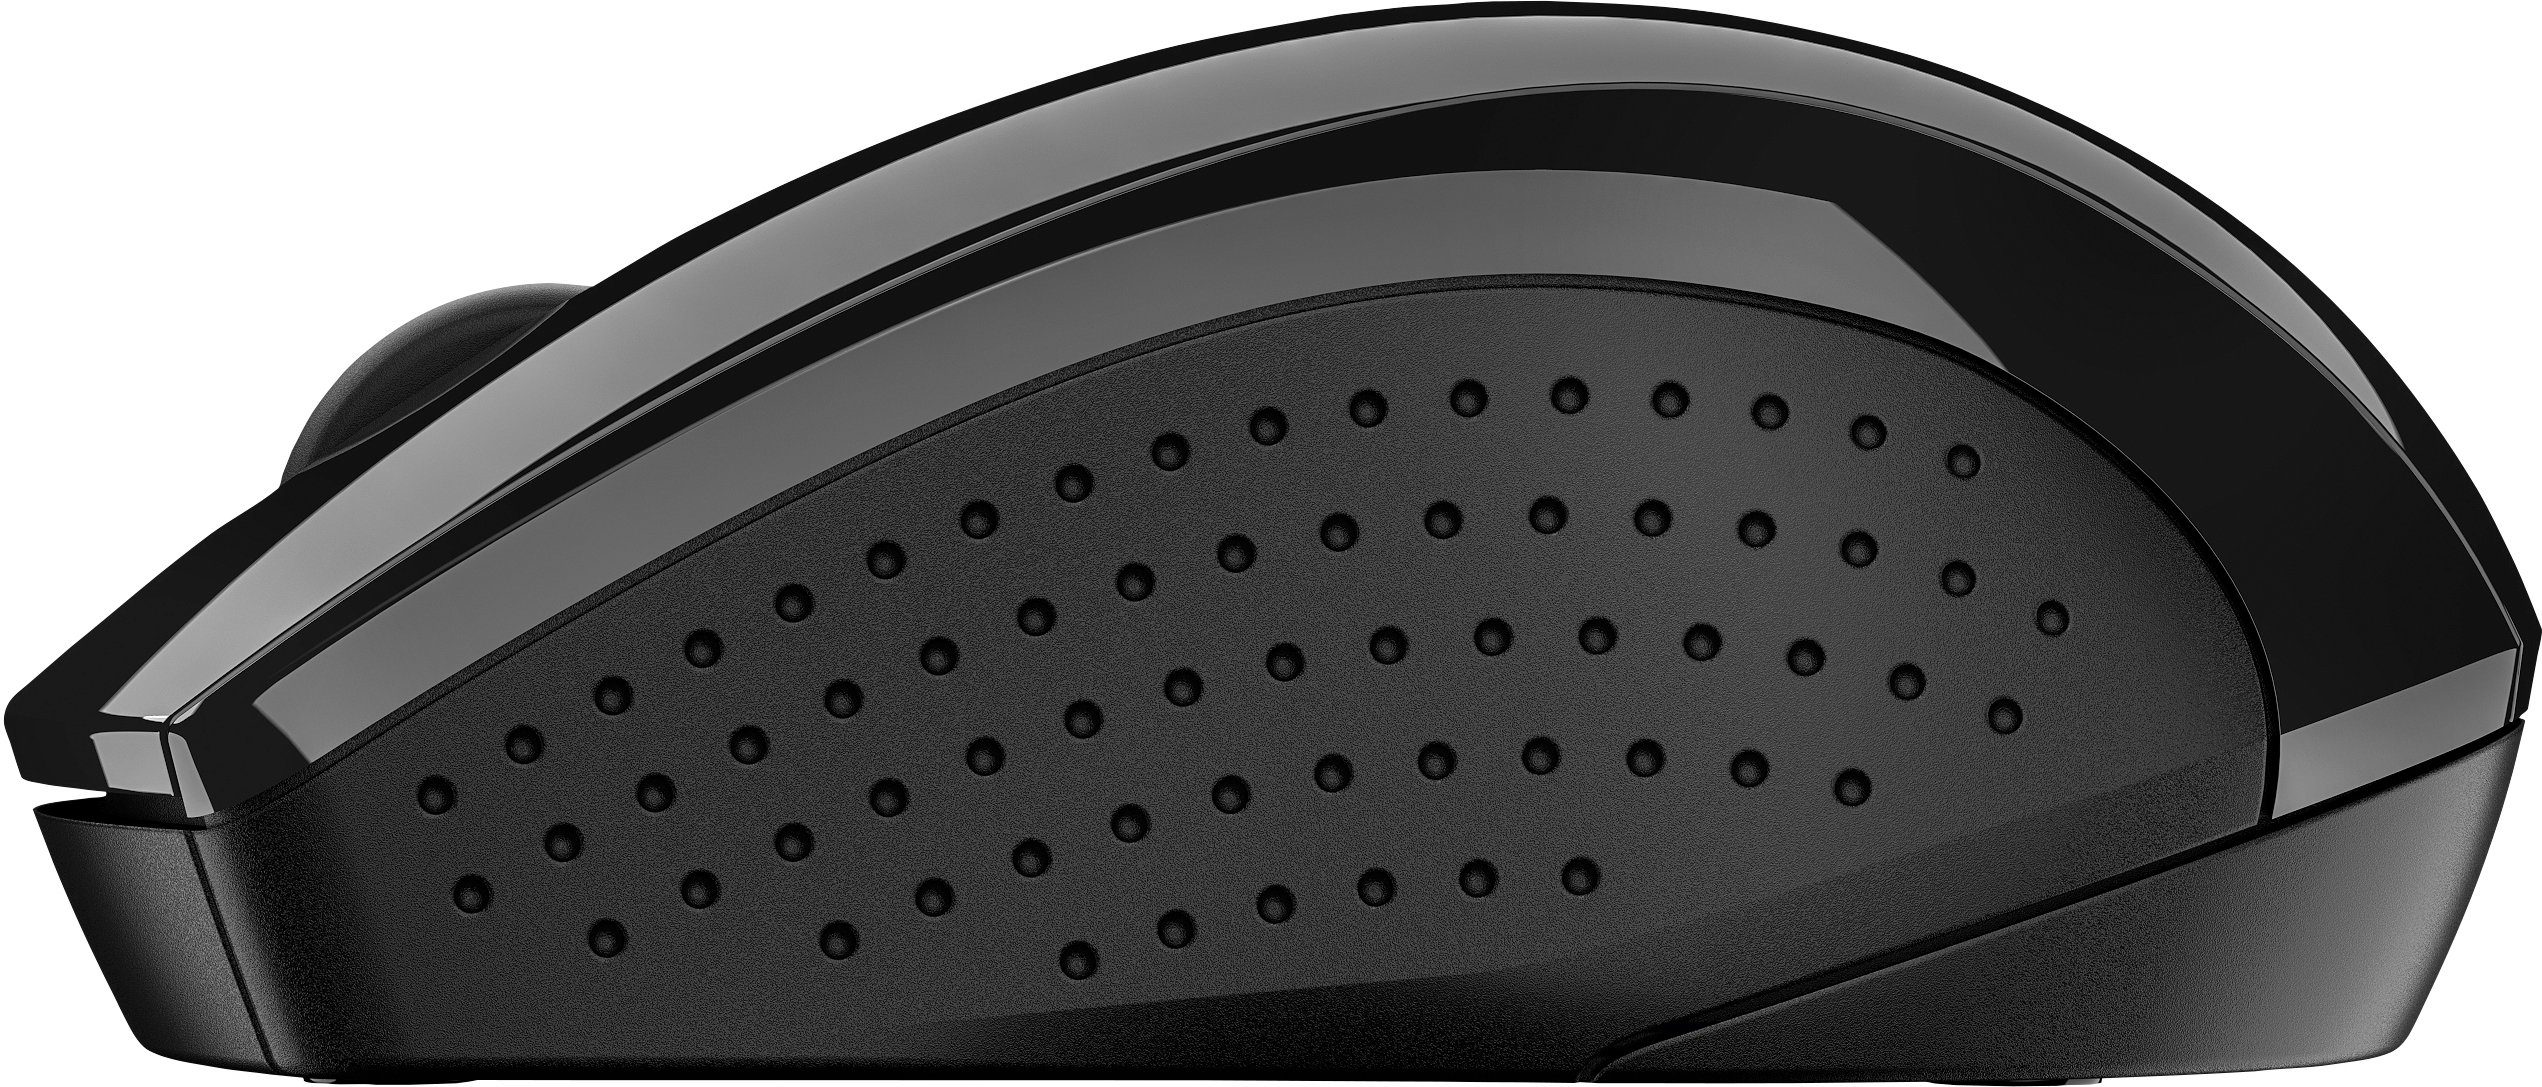 HP 220 (RF Silent Mouse Maus Wireless Wireless)